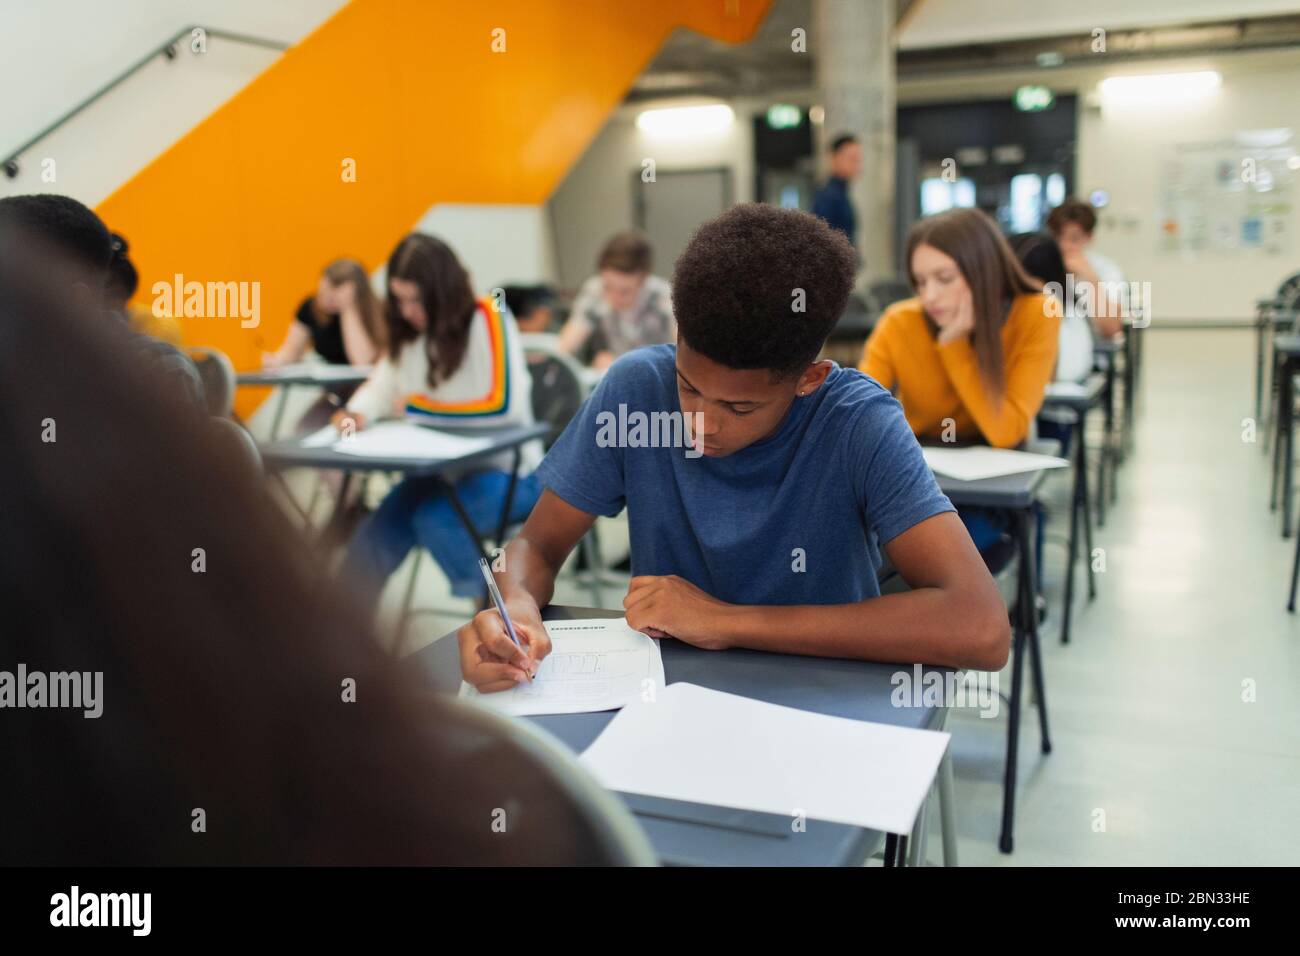 Focused high school boy student taking exam at desk Stock Photo